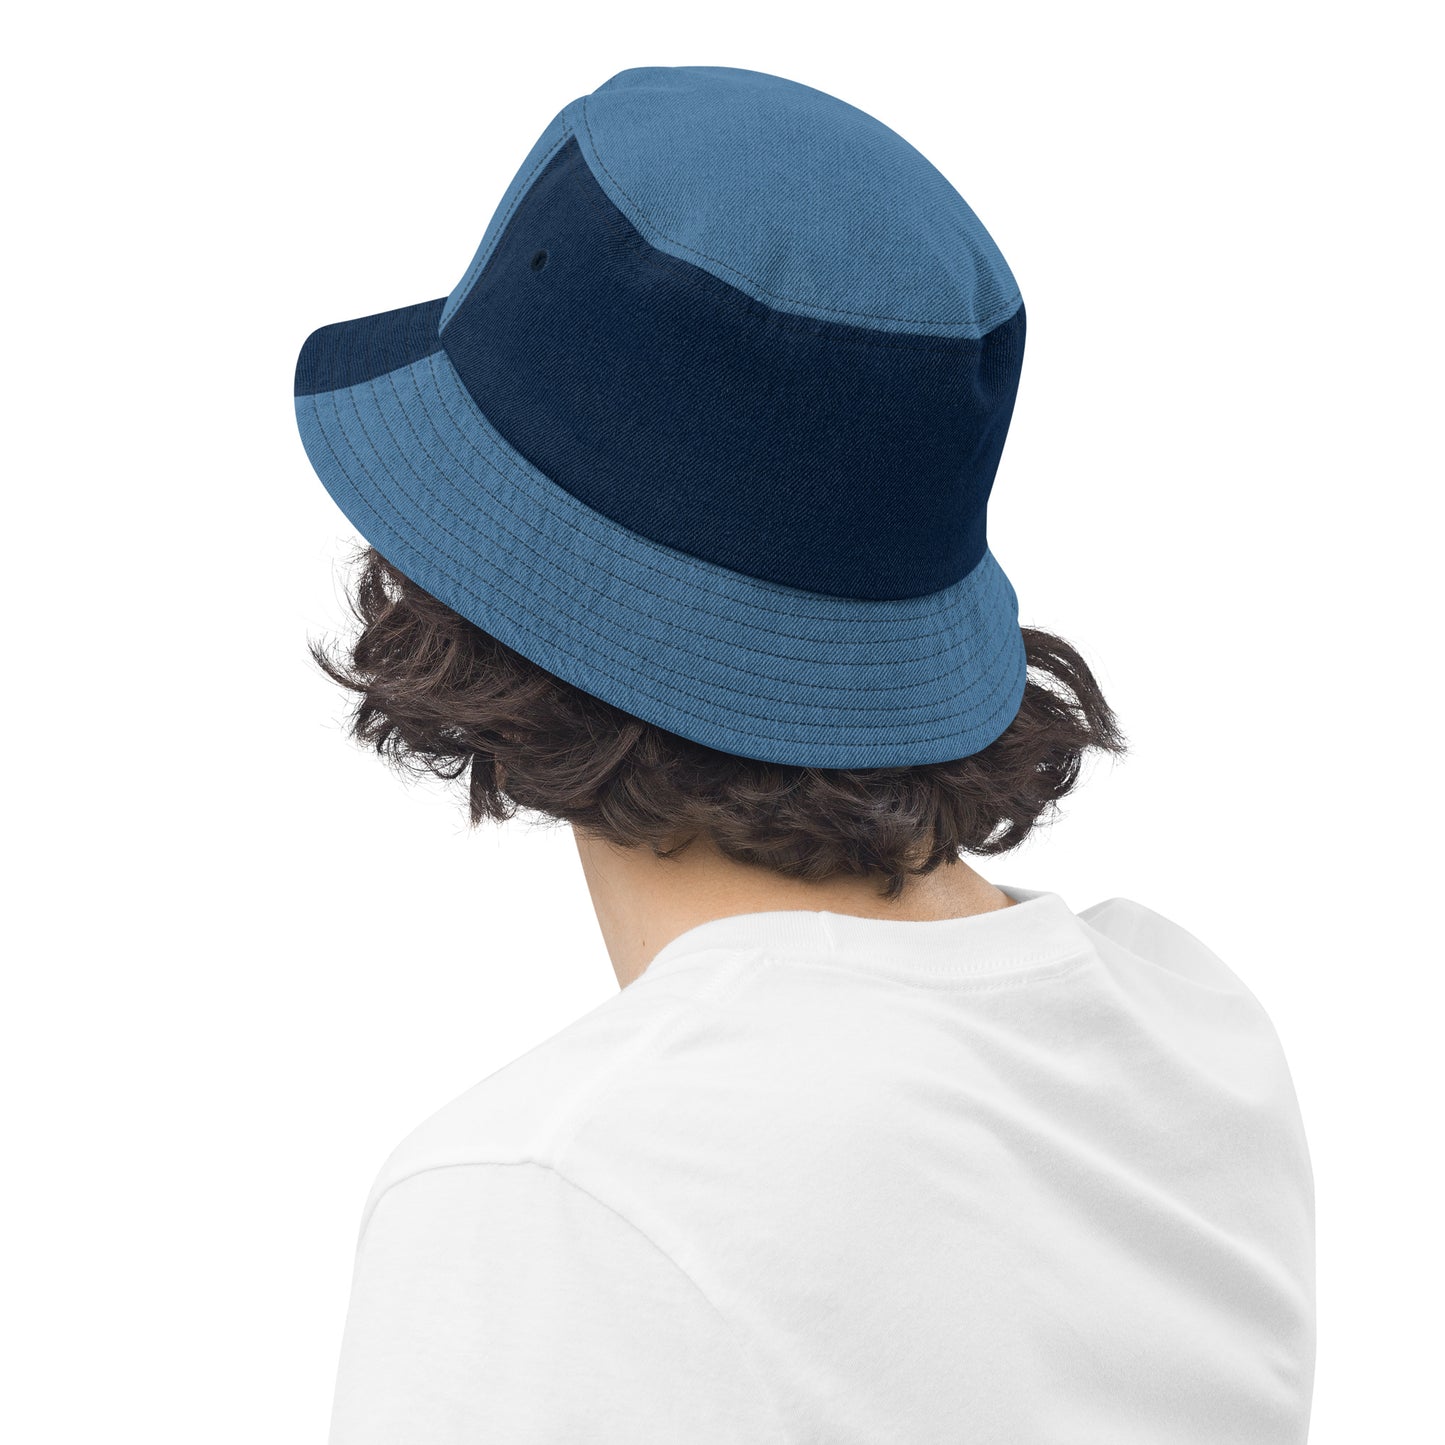 Bleu London Denim Bucket Hat